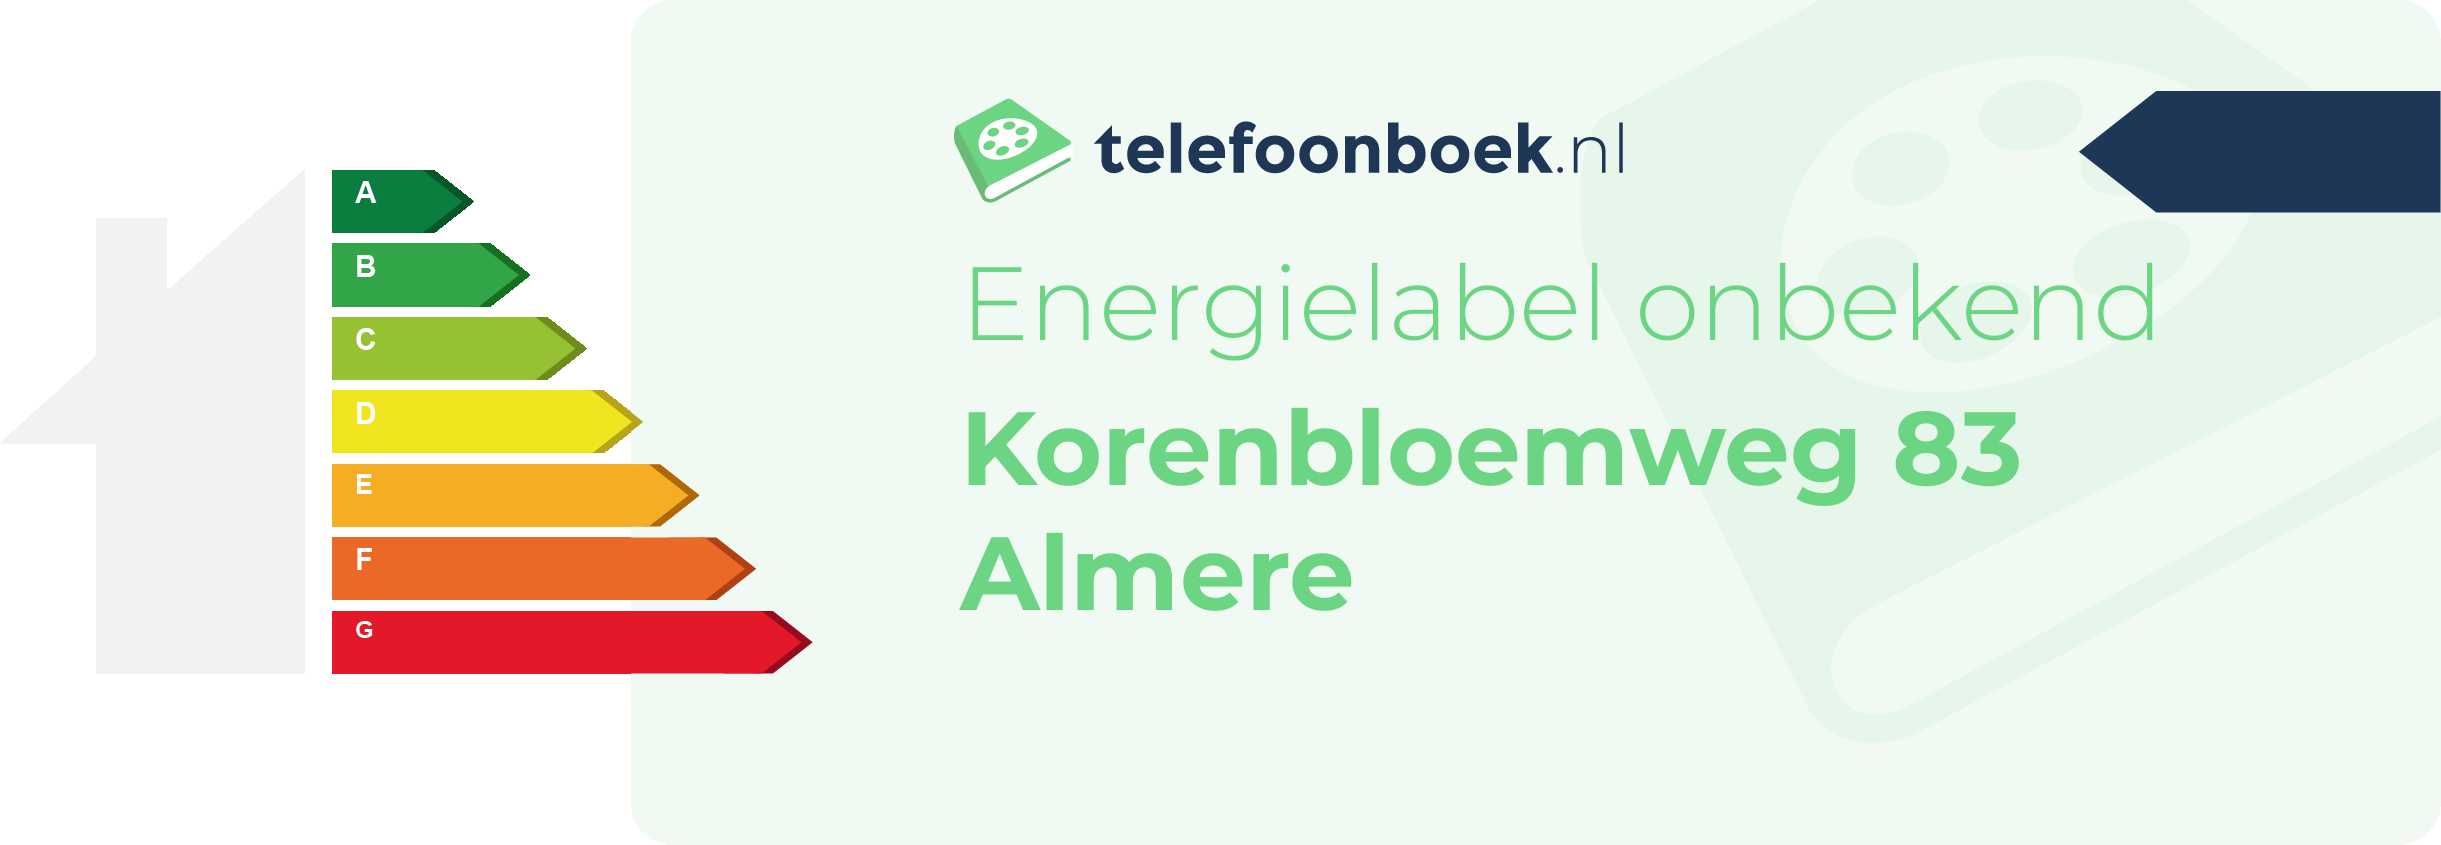 Energielabel Korenbloemweg 83 Almere